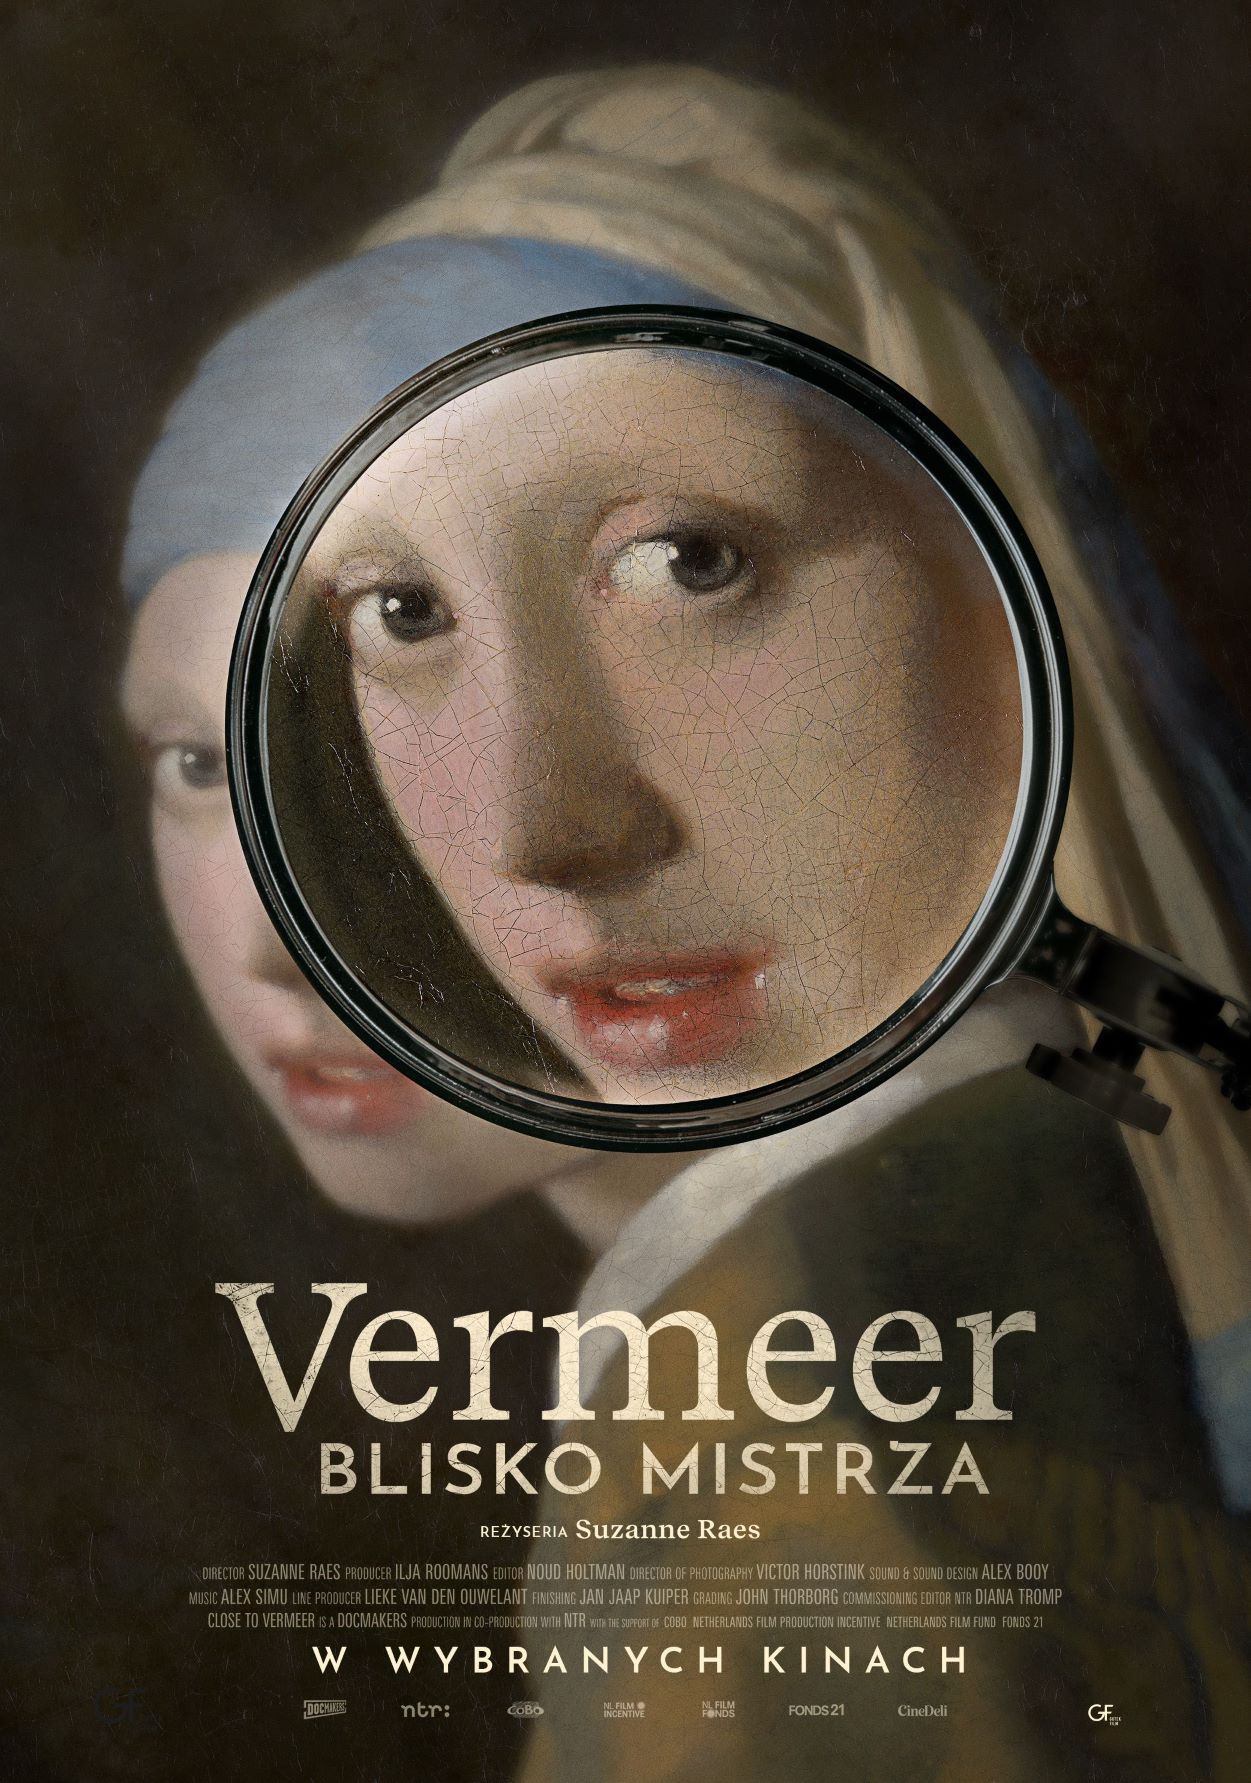 DKF: Vermeer. Blisko mistrza